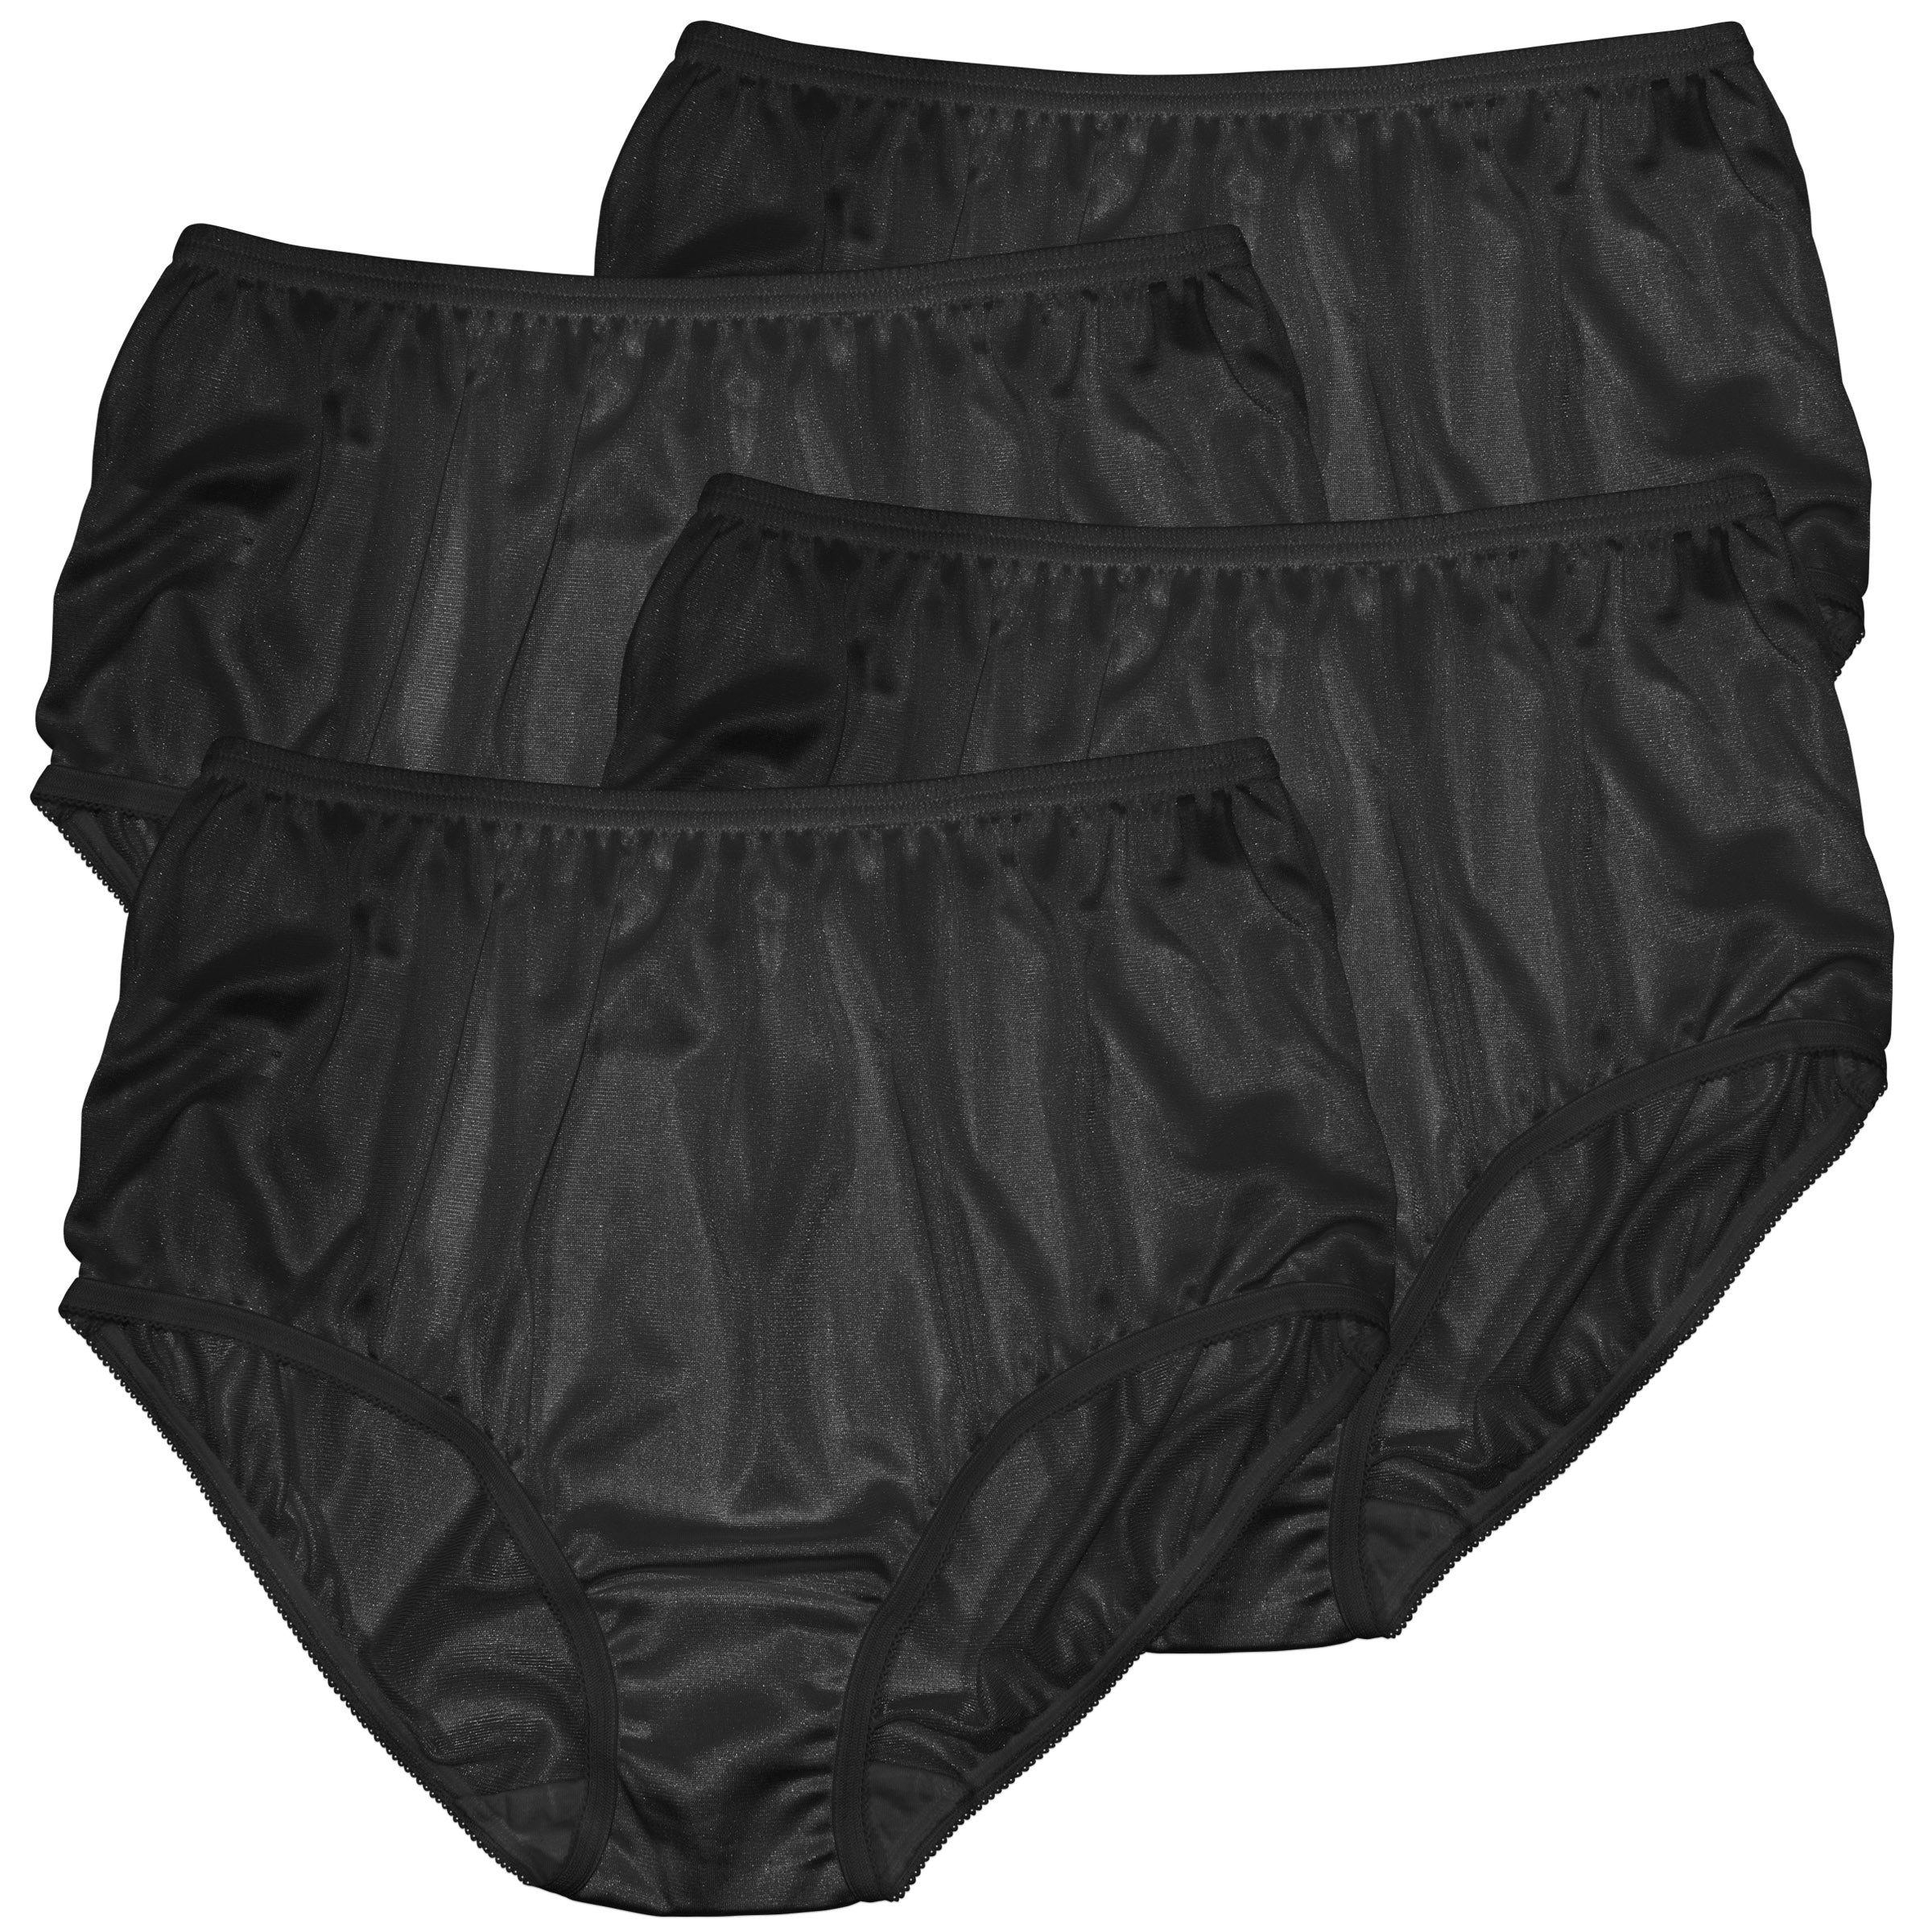 Classic Nylon, Full Coverage Brief Panty- Black 4 or 12 Pack (Plain Jane)